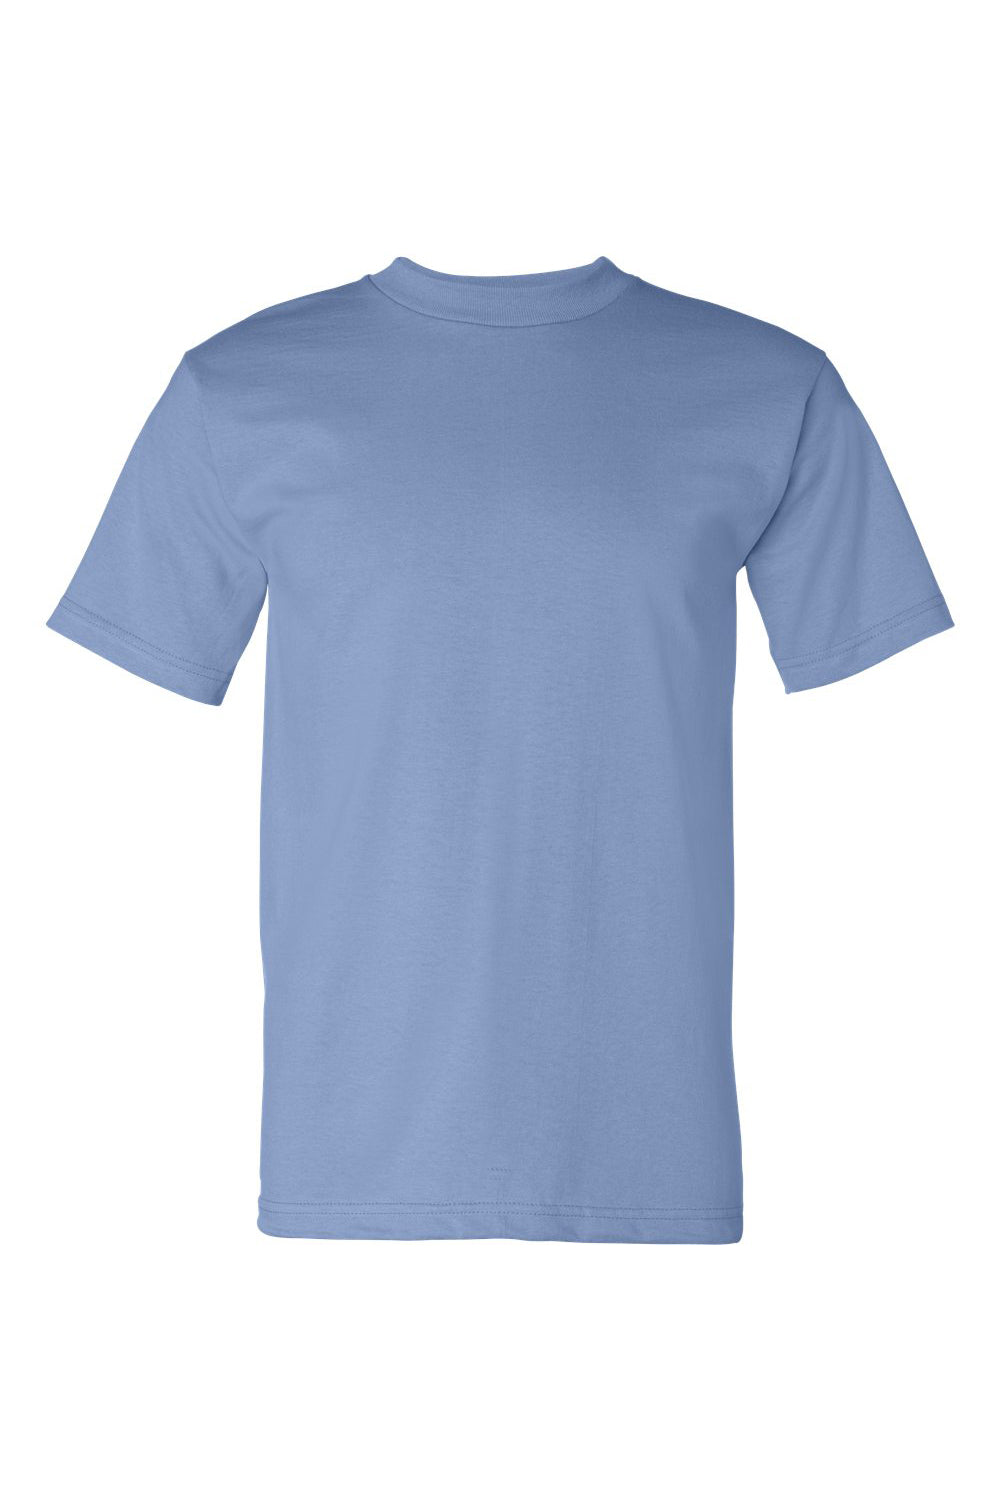 Bayside BA5100 Mens USA Made Short Sleeve Crewneck T-Shirt Carolina Blue Flat Front